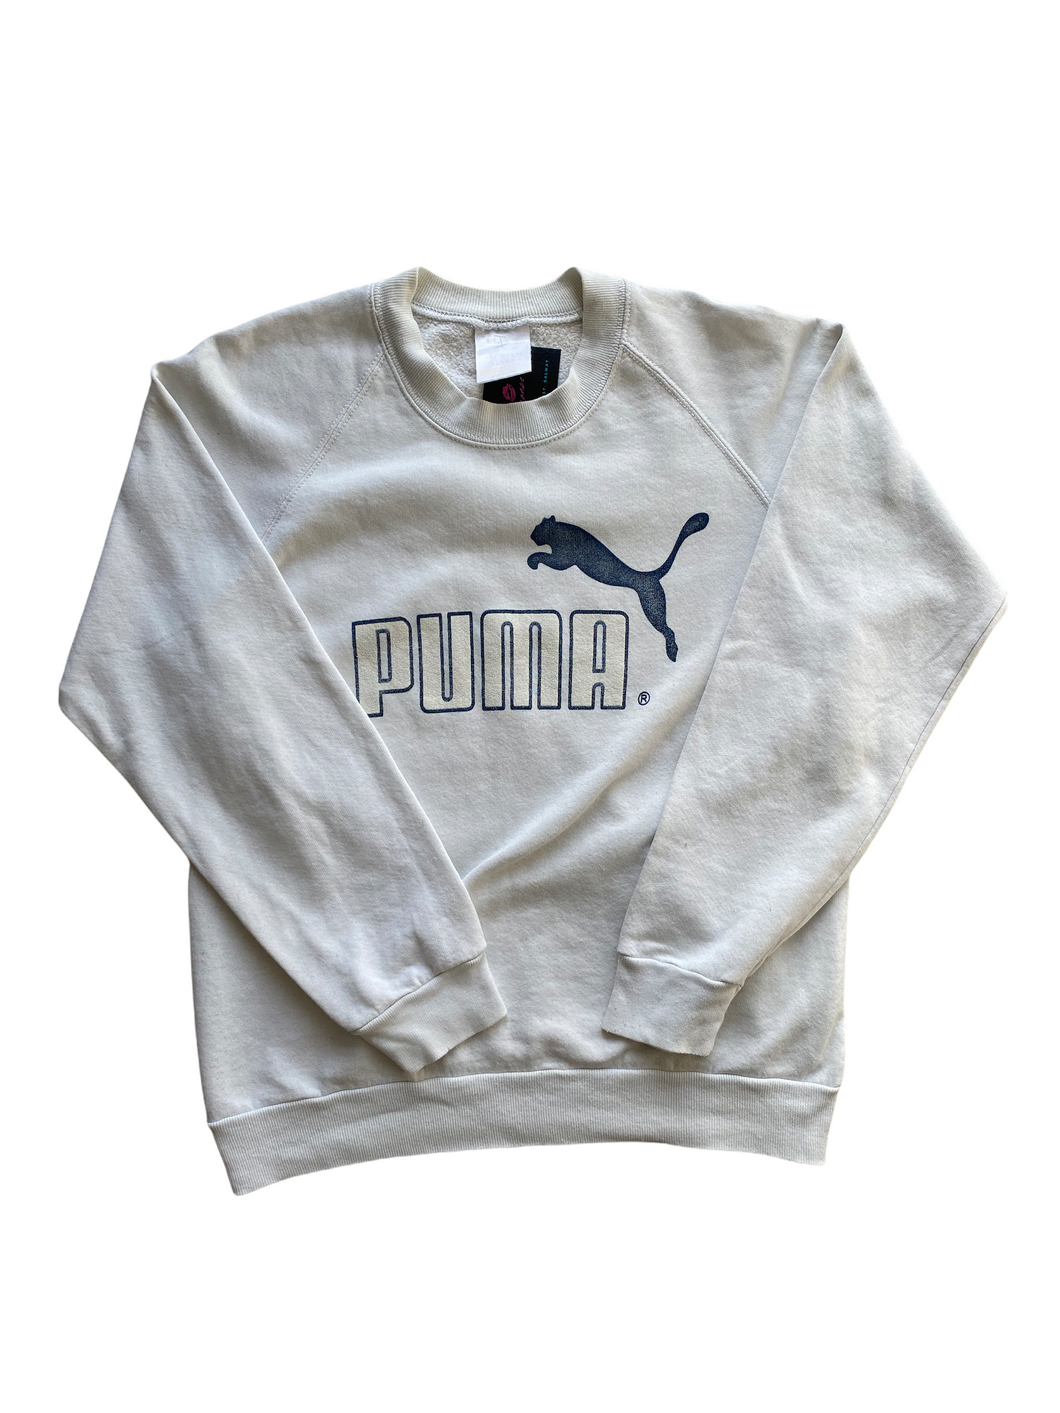 vintage white puma sweater size small